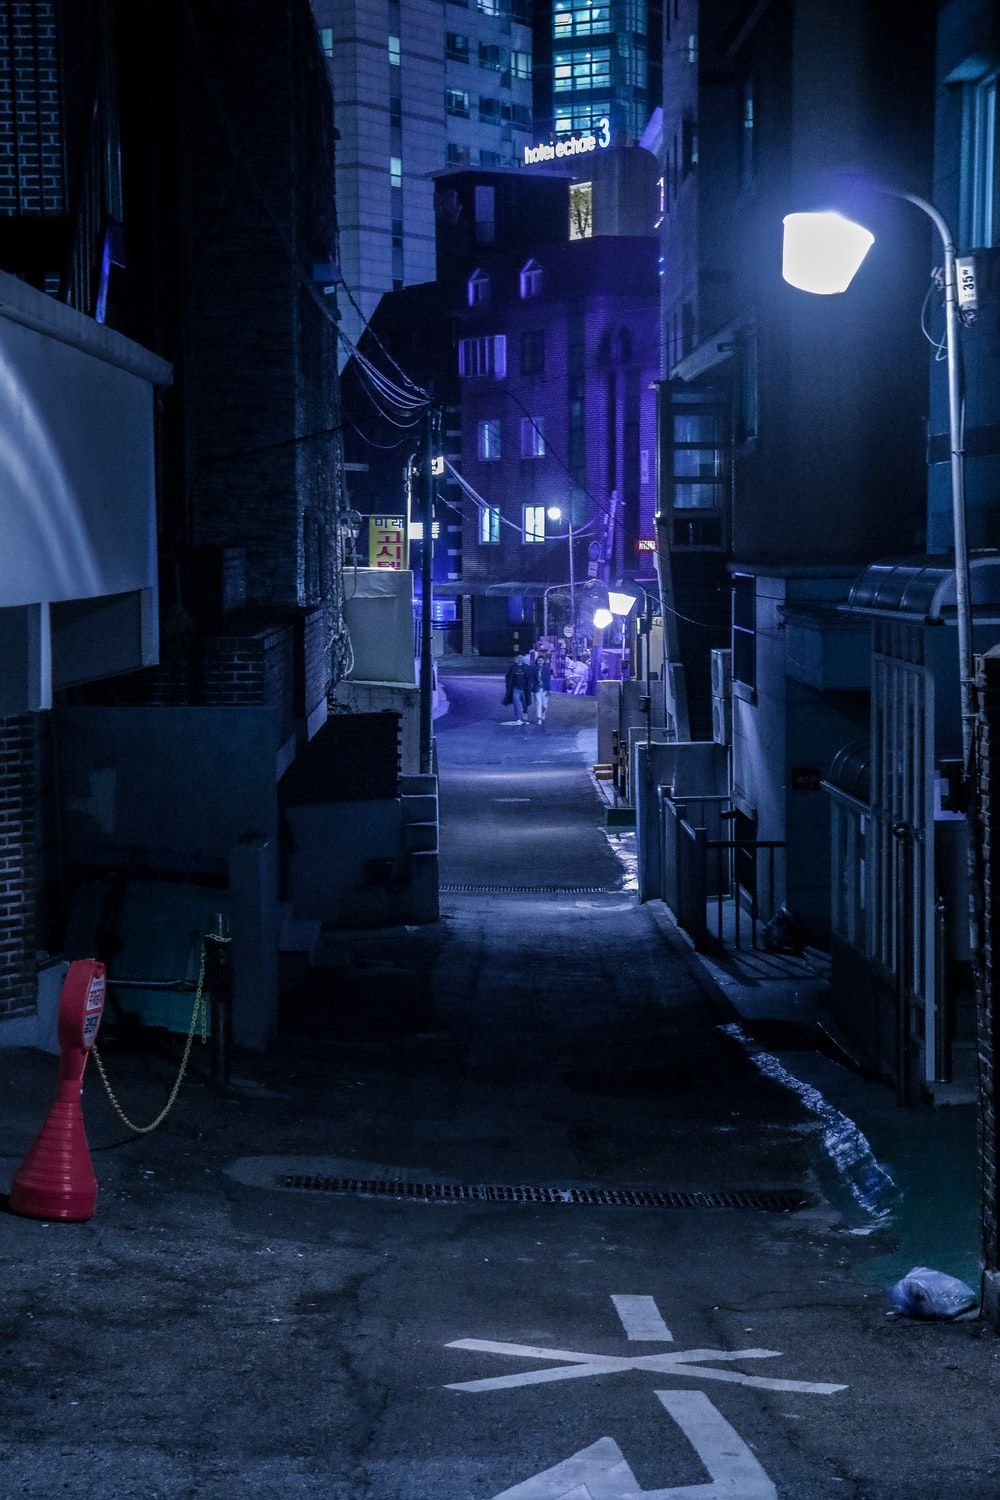 Korea Street Picture. Download Free Image